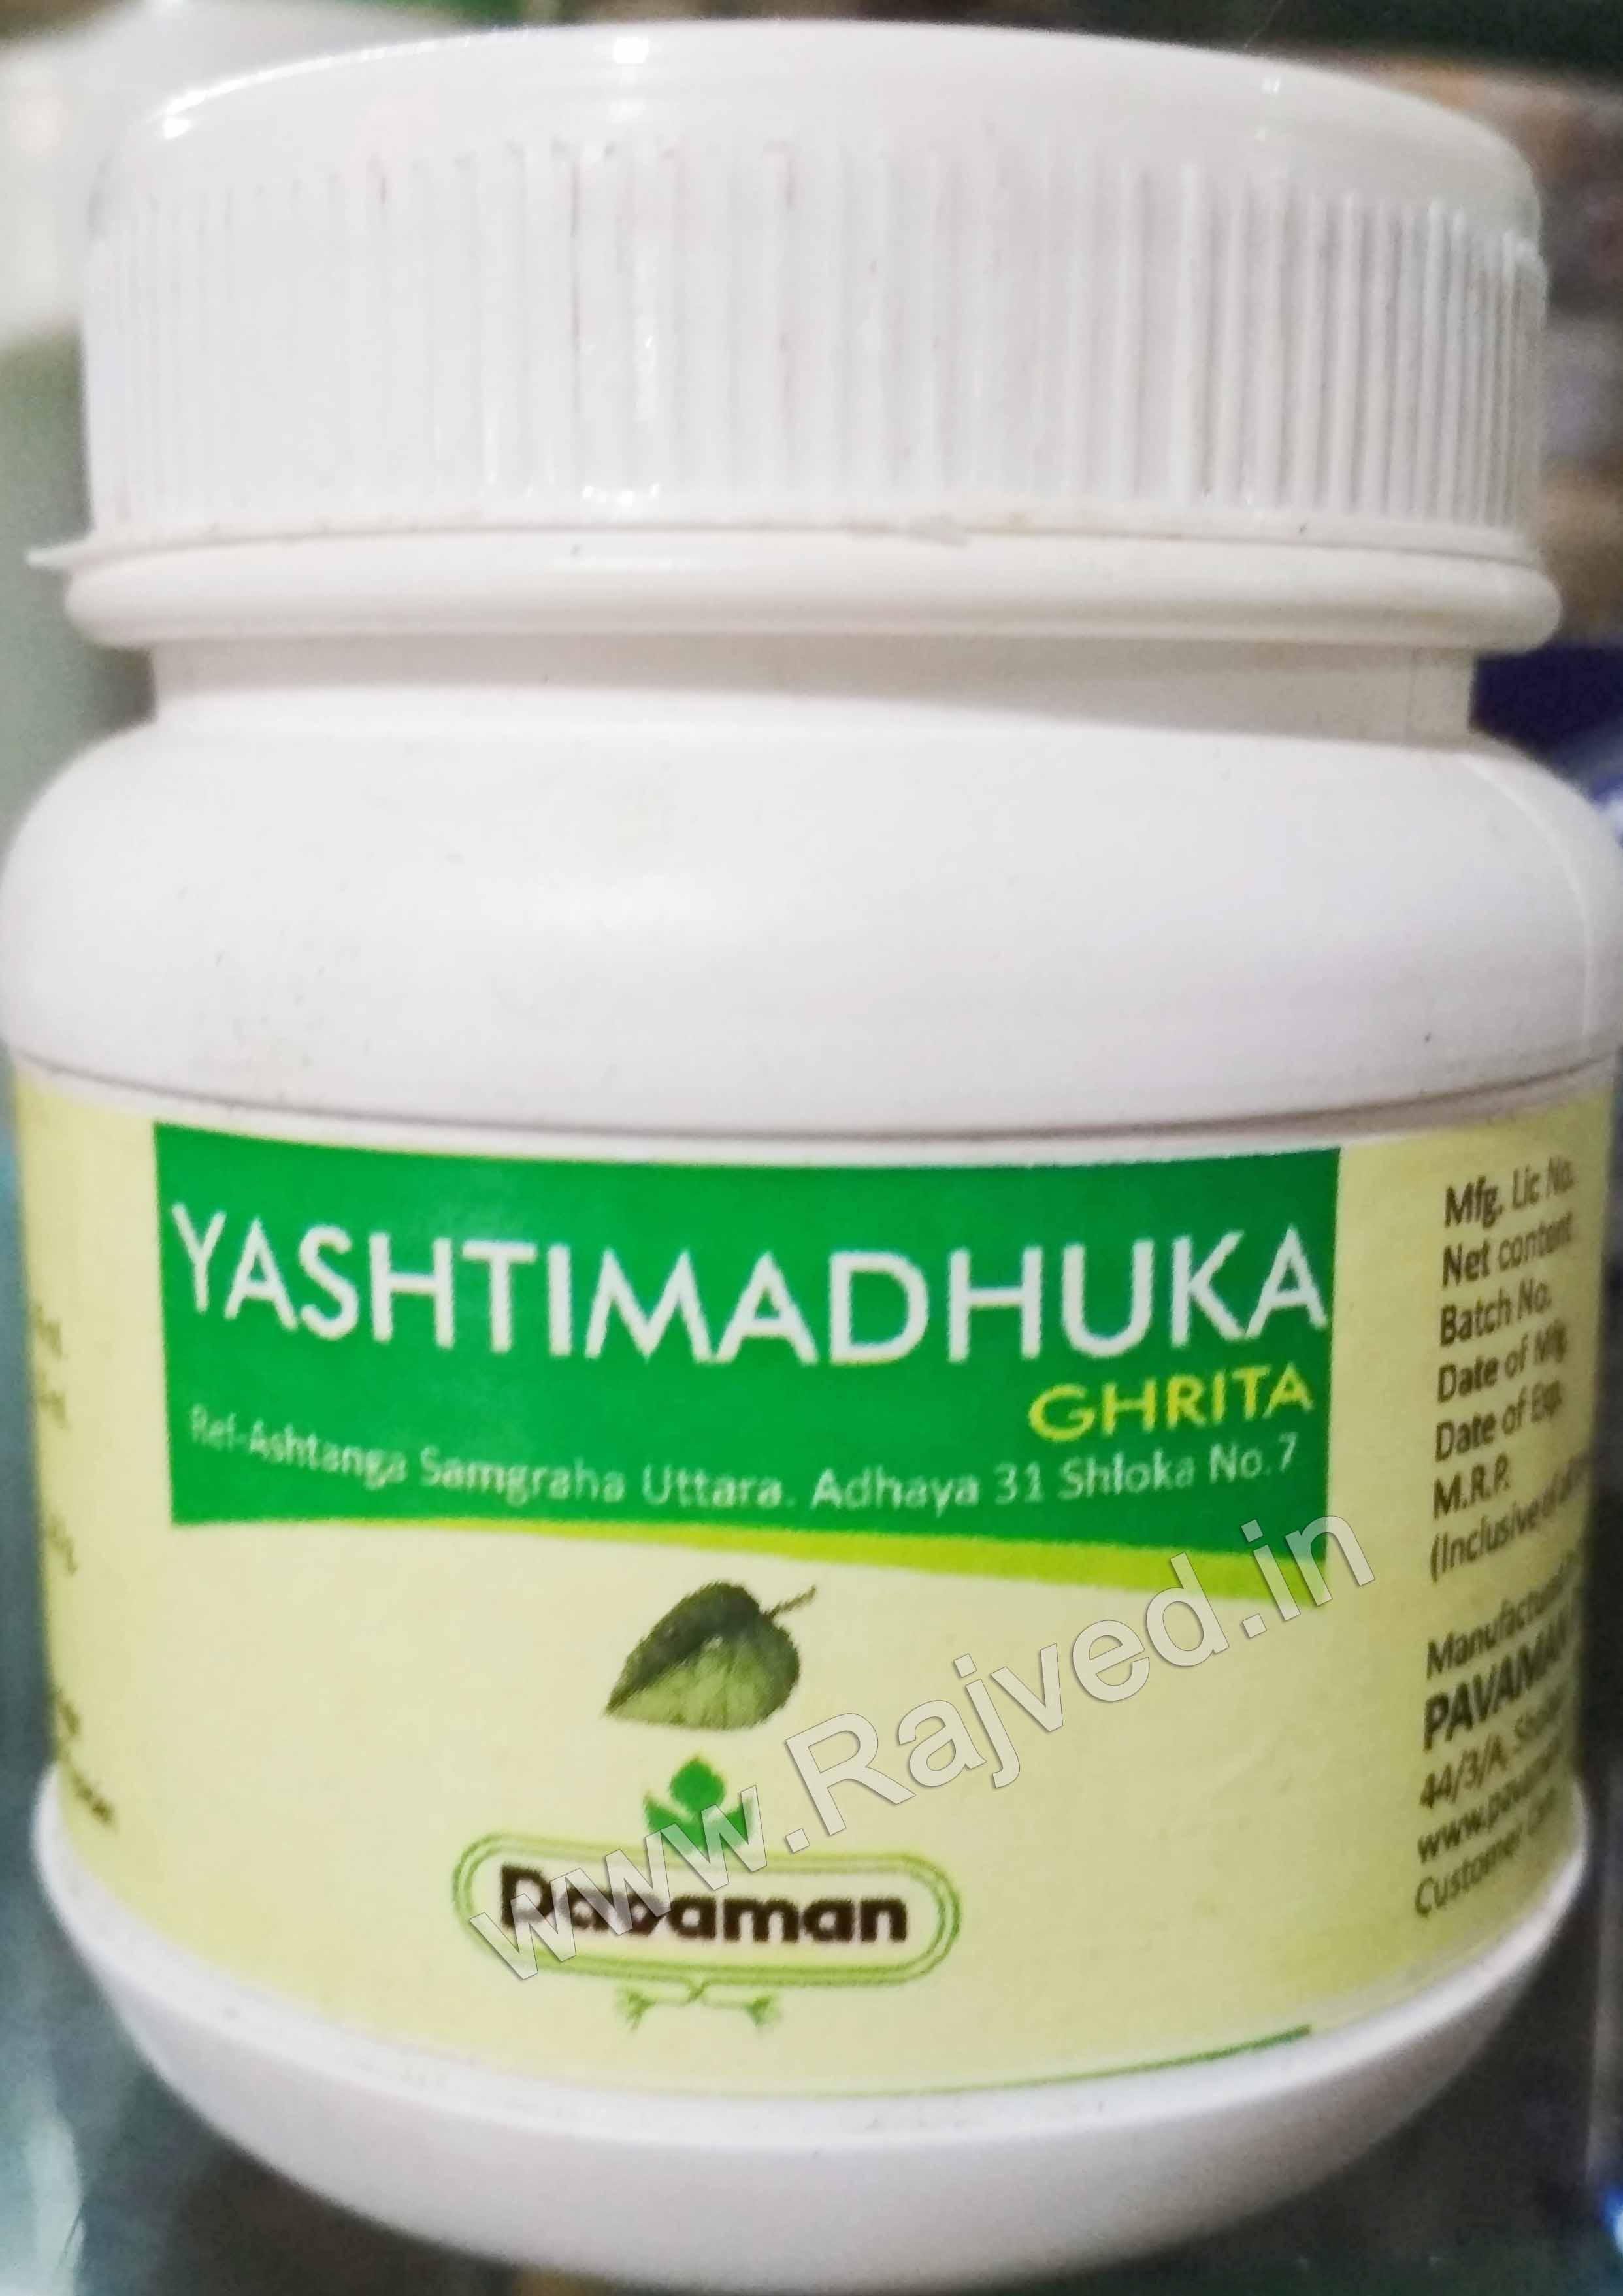 yashtimadhuka ghrita 200 ml upto 20% off pavaman pharmaceuticals